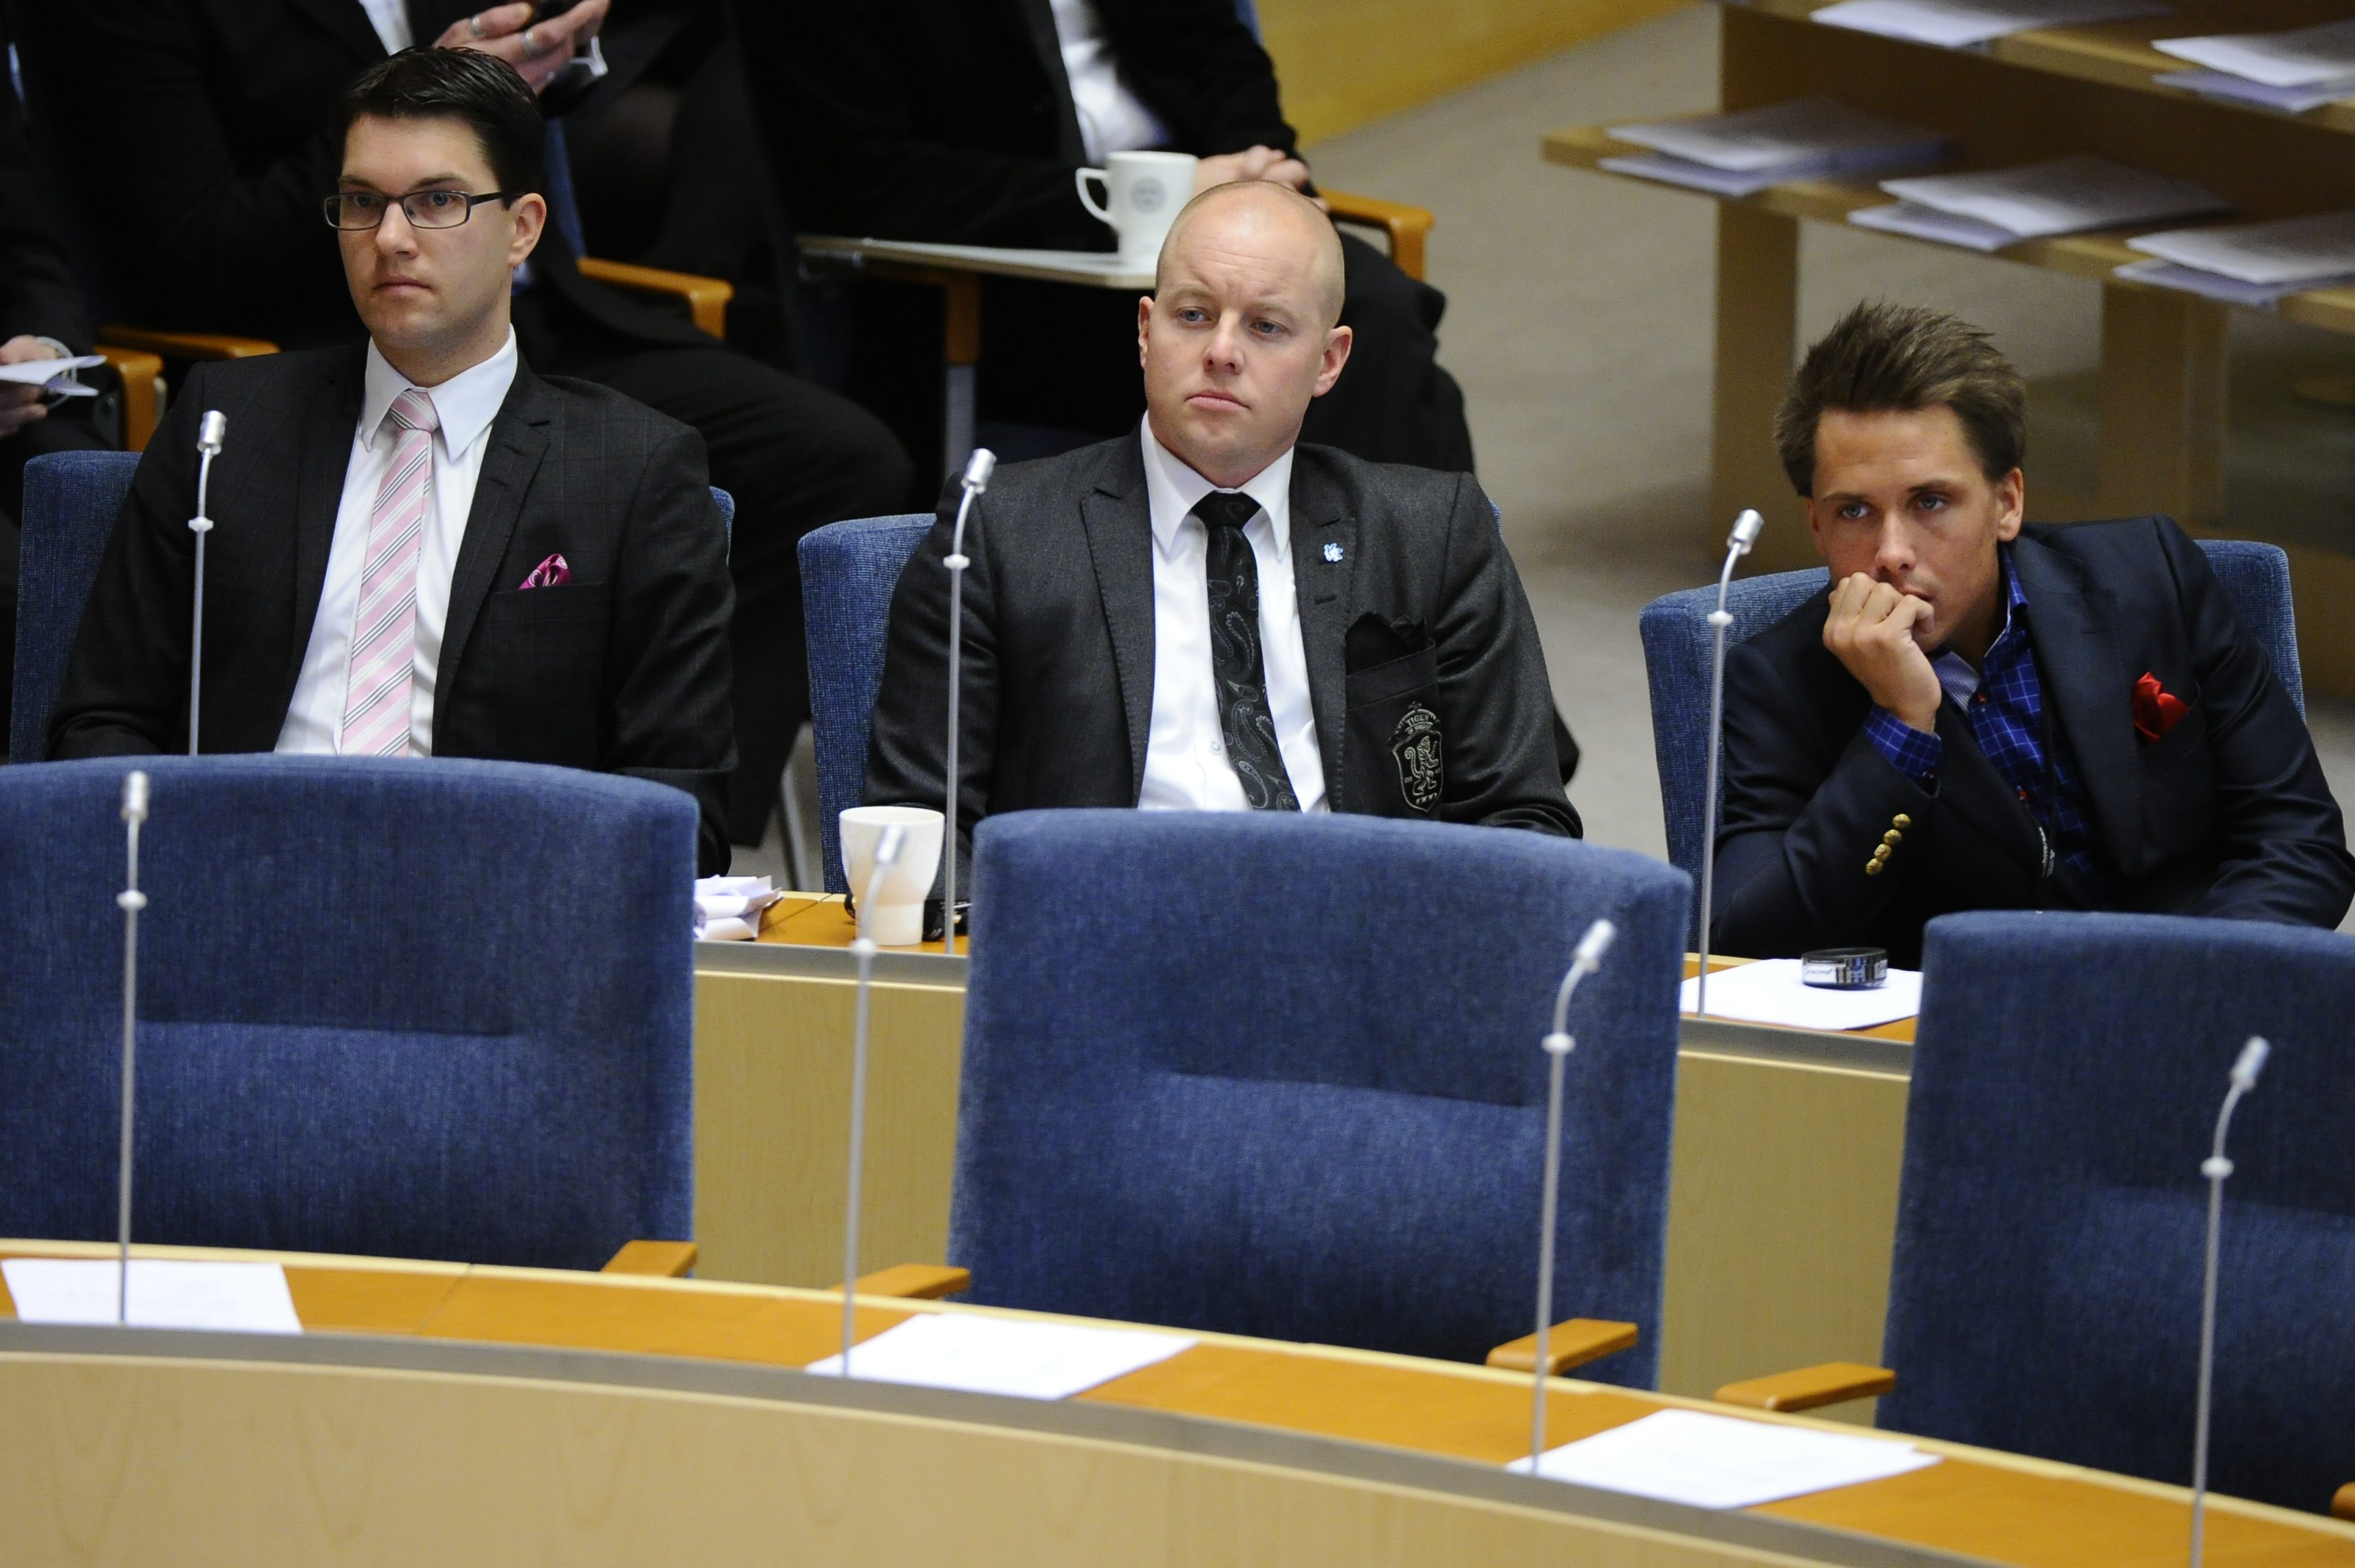 Politik, Jimmie Åkesson, Erik Almqvist, Sverigedemokraterna, Alkohol, William Petzäll